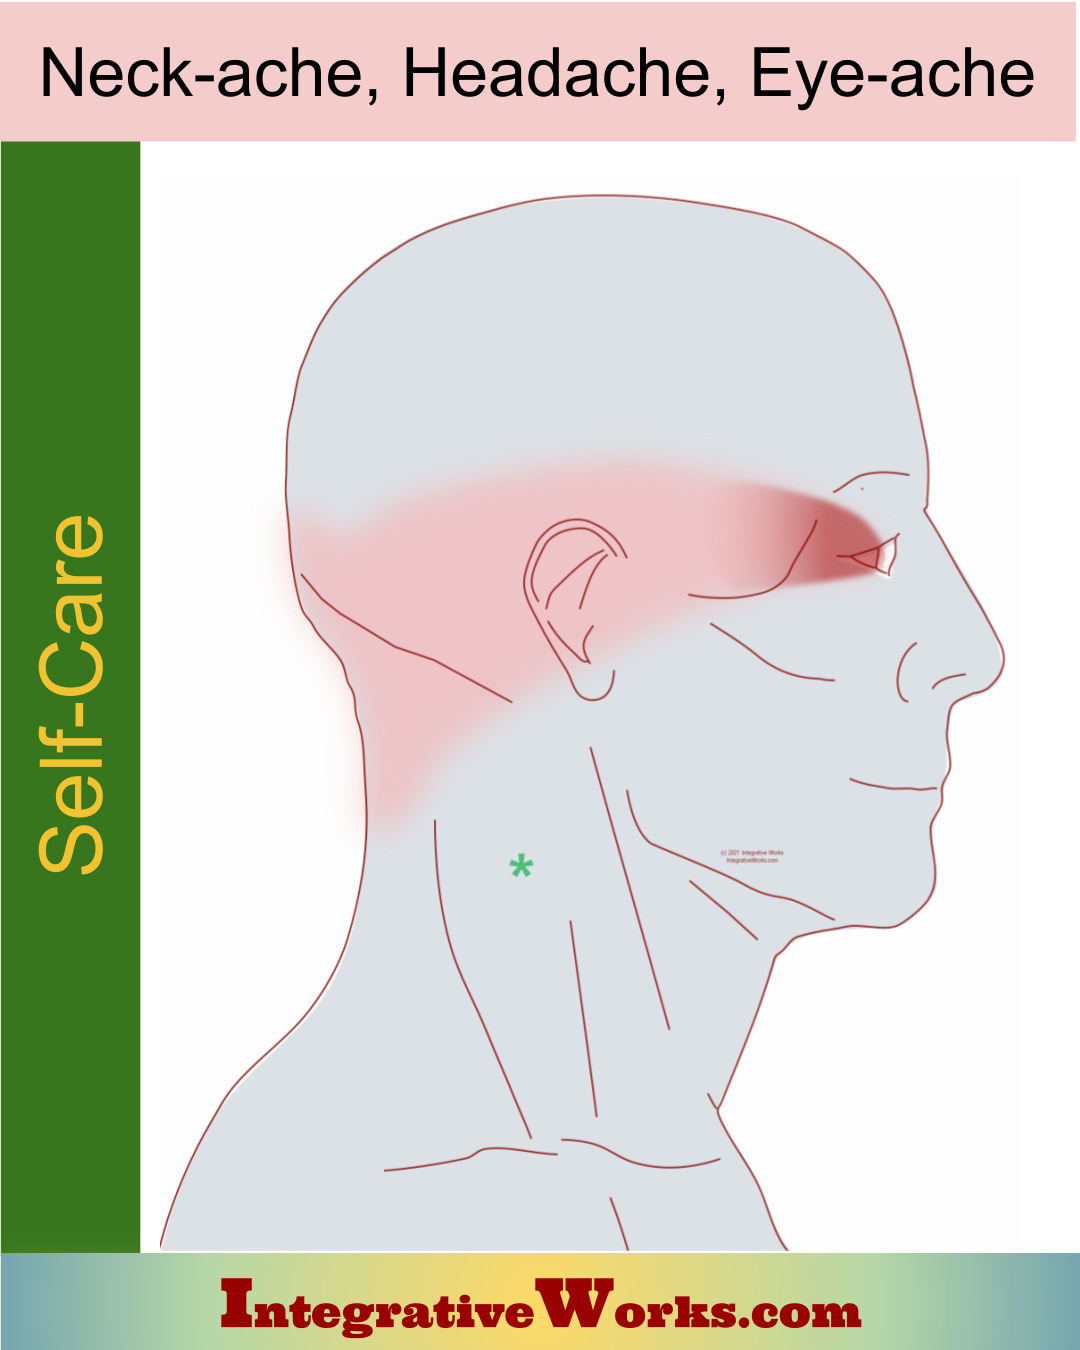 Self Care – Neck-ache Headache, Eye-ache